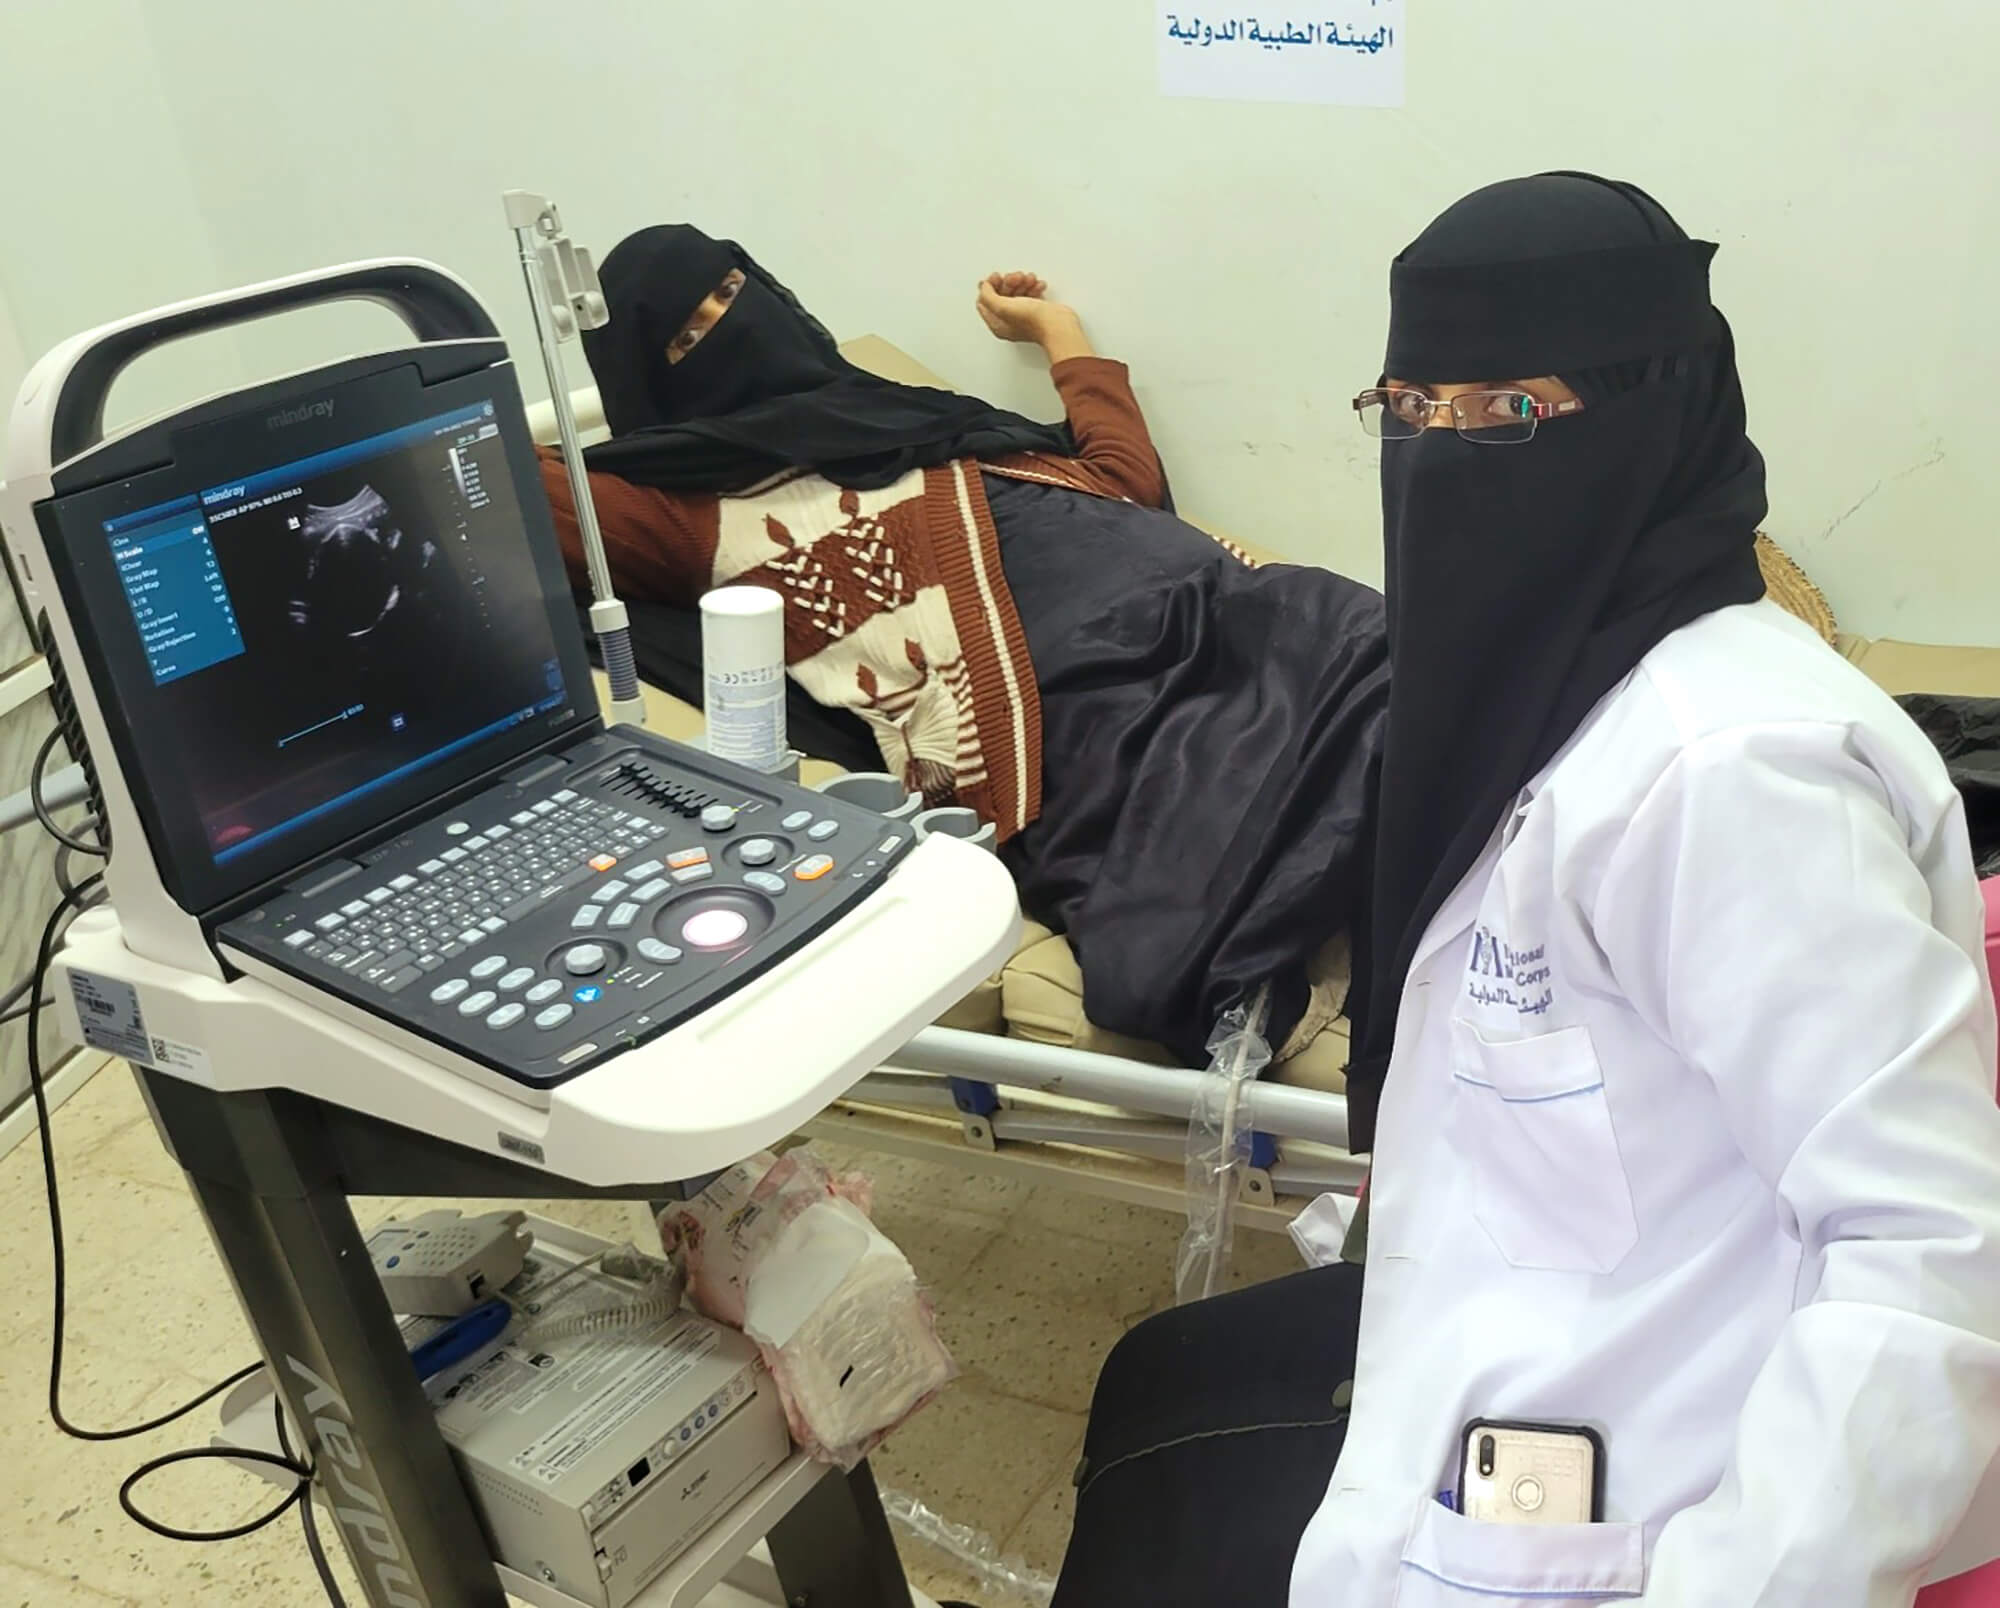 Midwife technician Ebtisam Al-Zaidi examines a pregnant woman at a health center in Yemen.